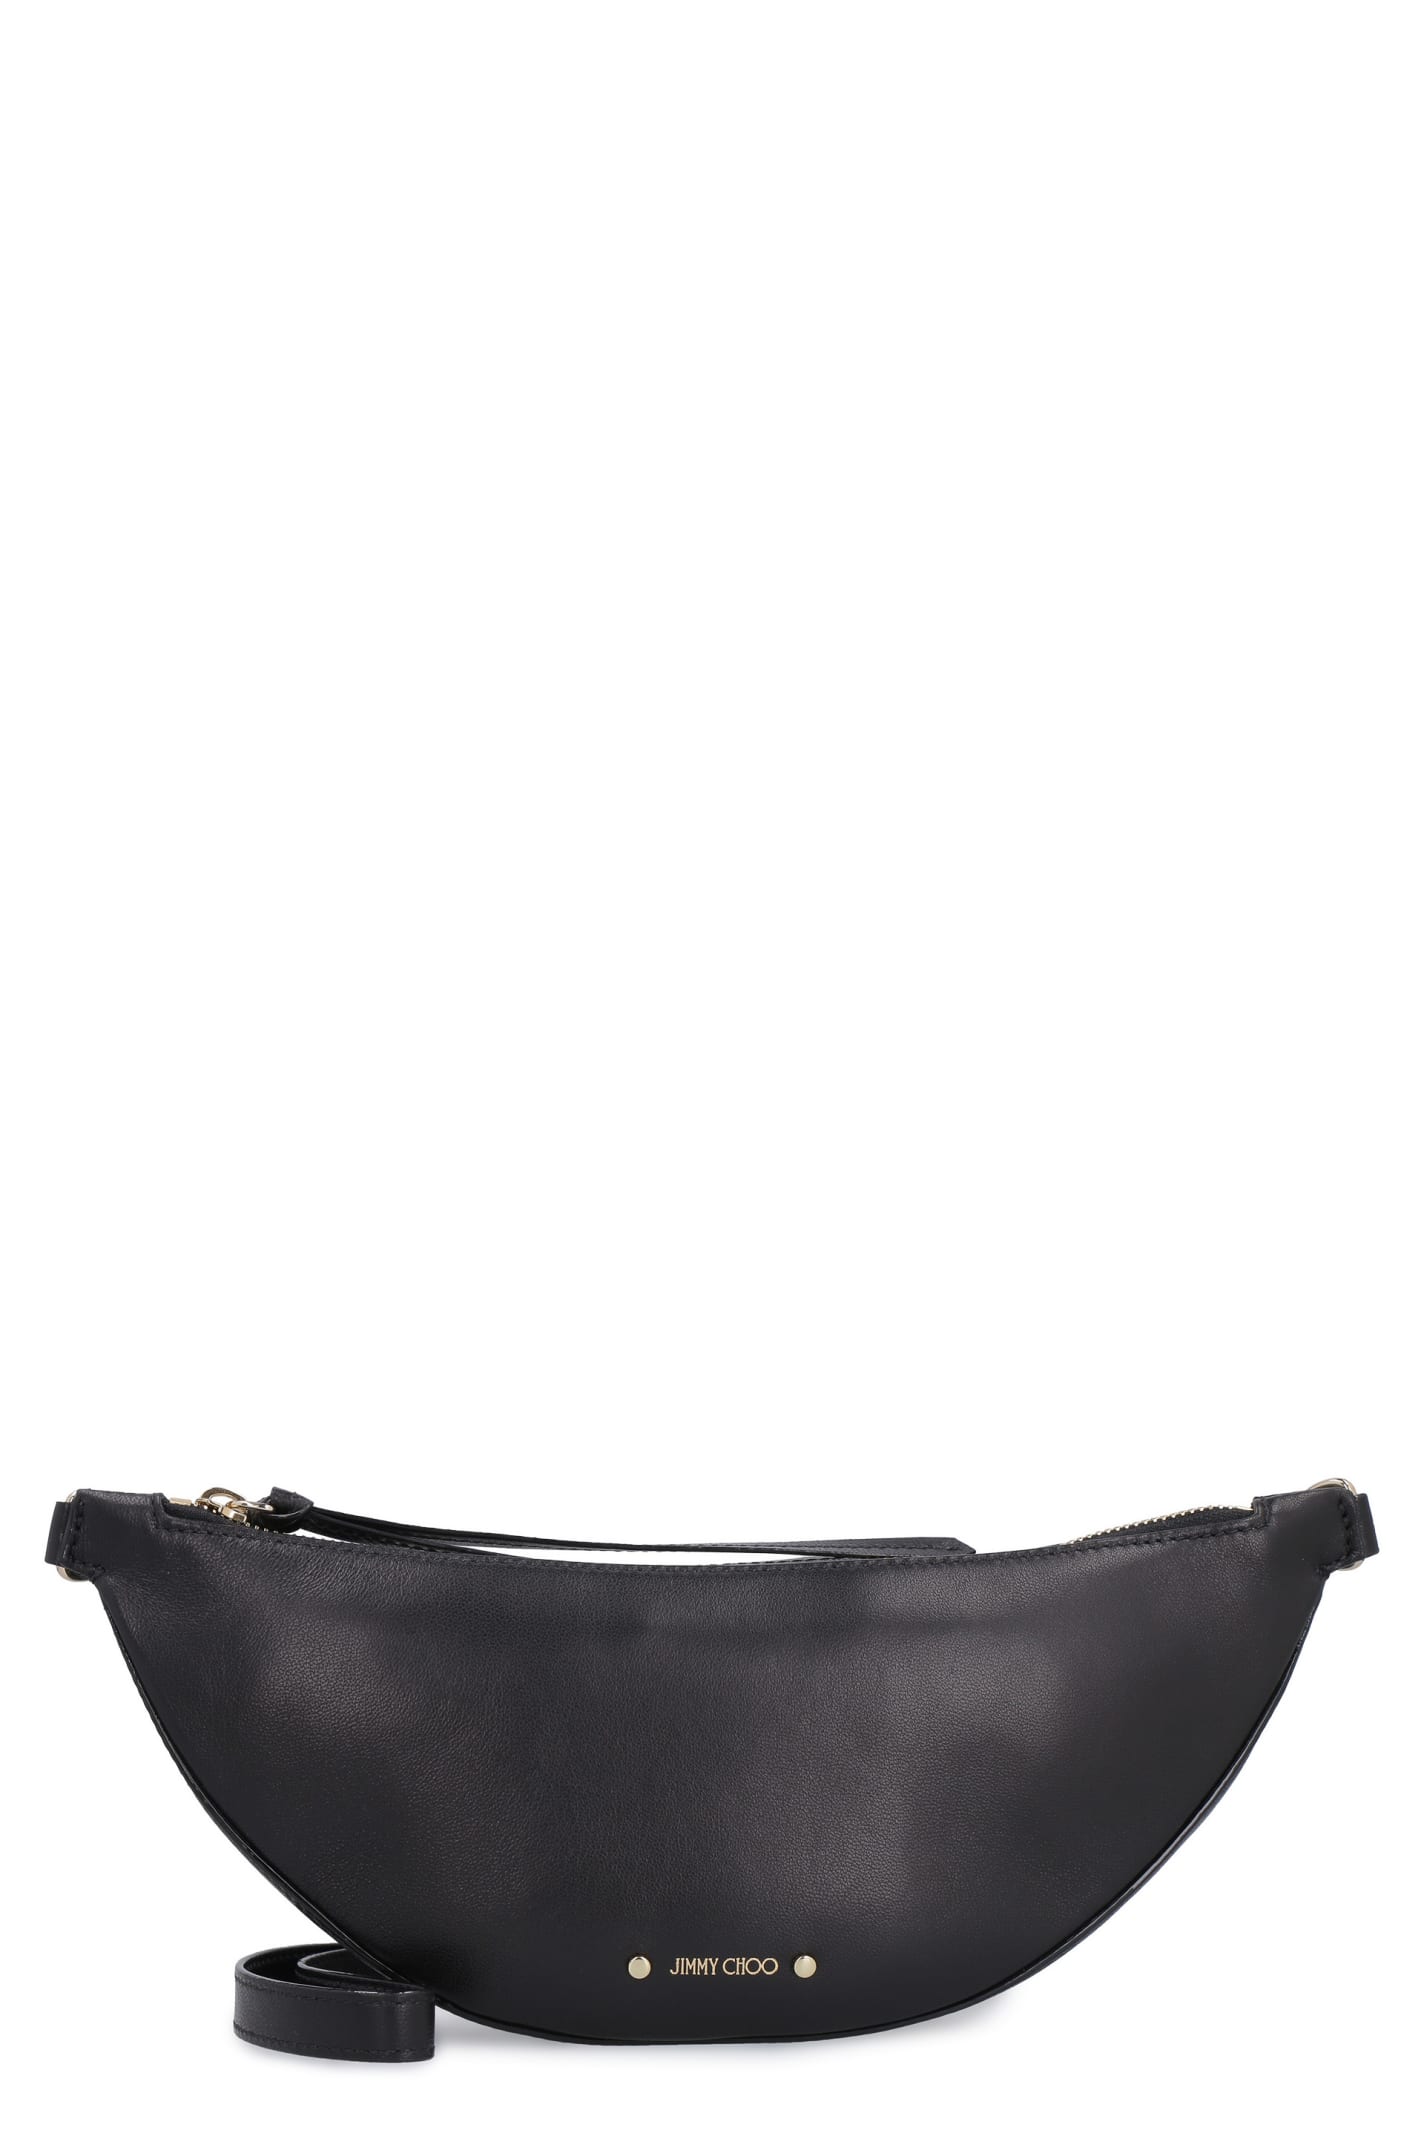 Jimmy Choo Faye Leather Belt Bag With Logo In Black